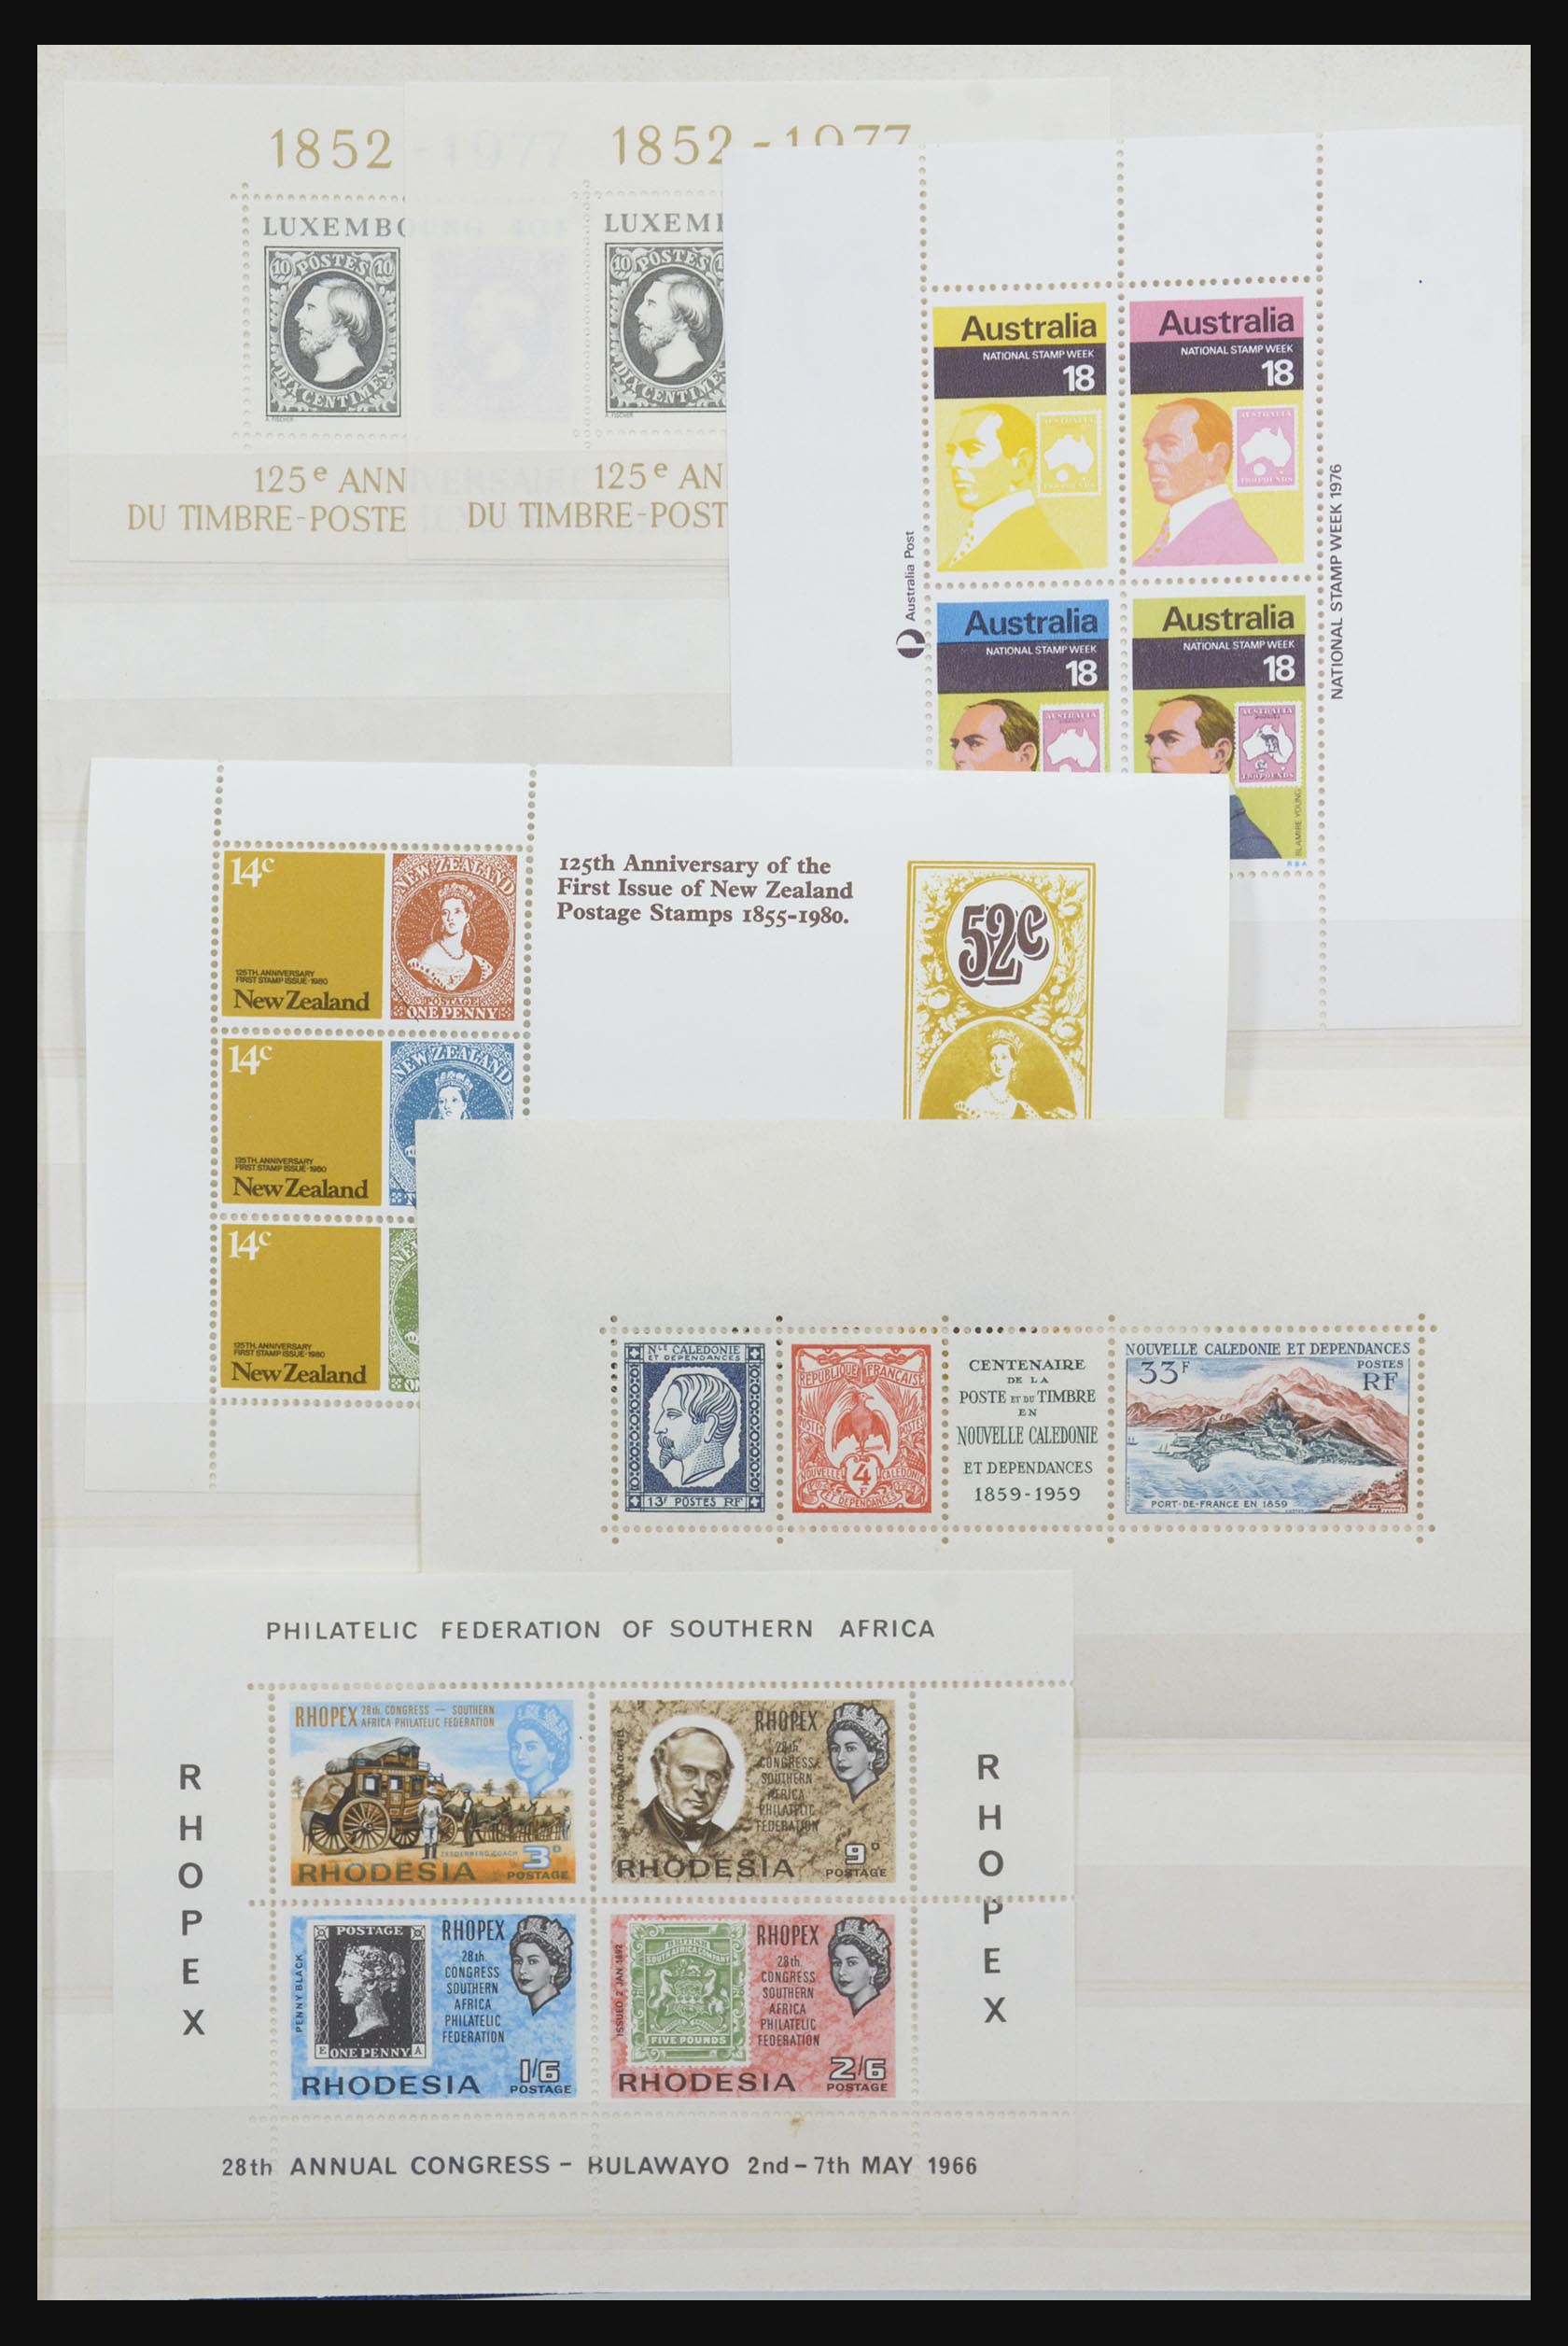 31652 013 - 31652 Motief: postzegel op postzegel 1940-1993.